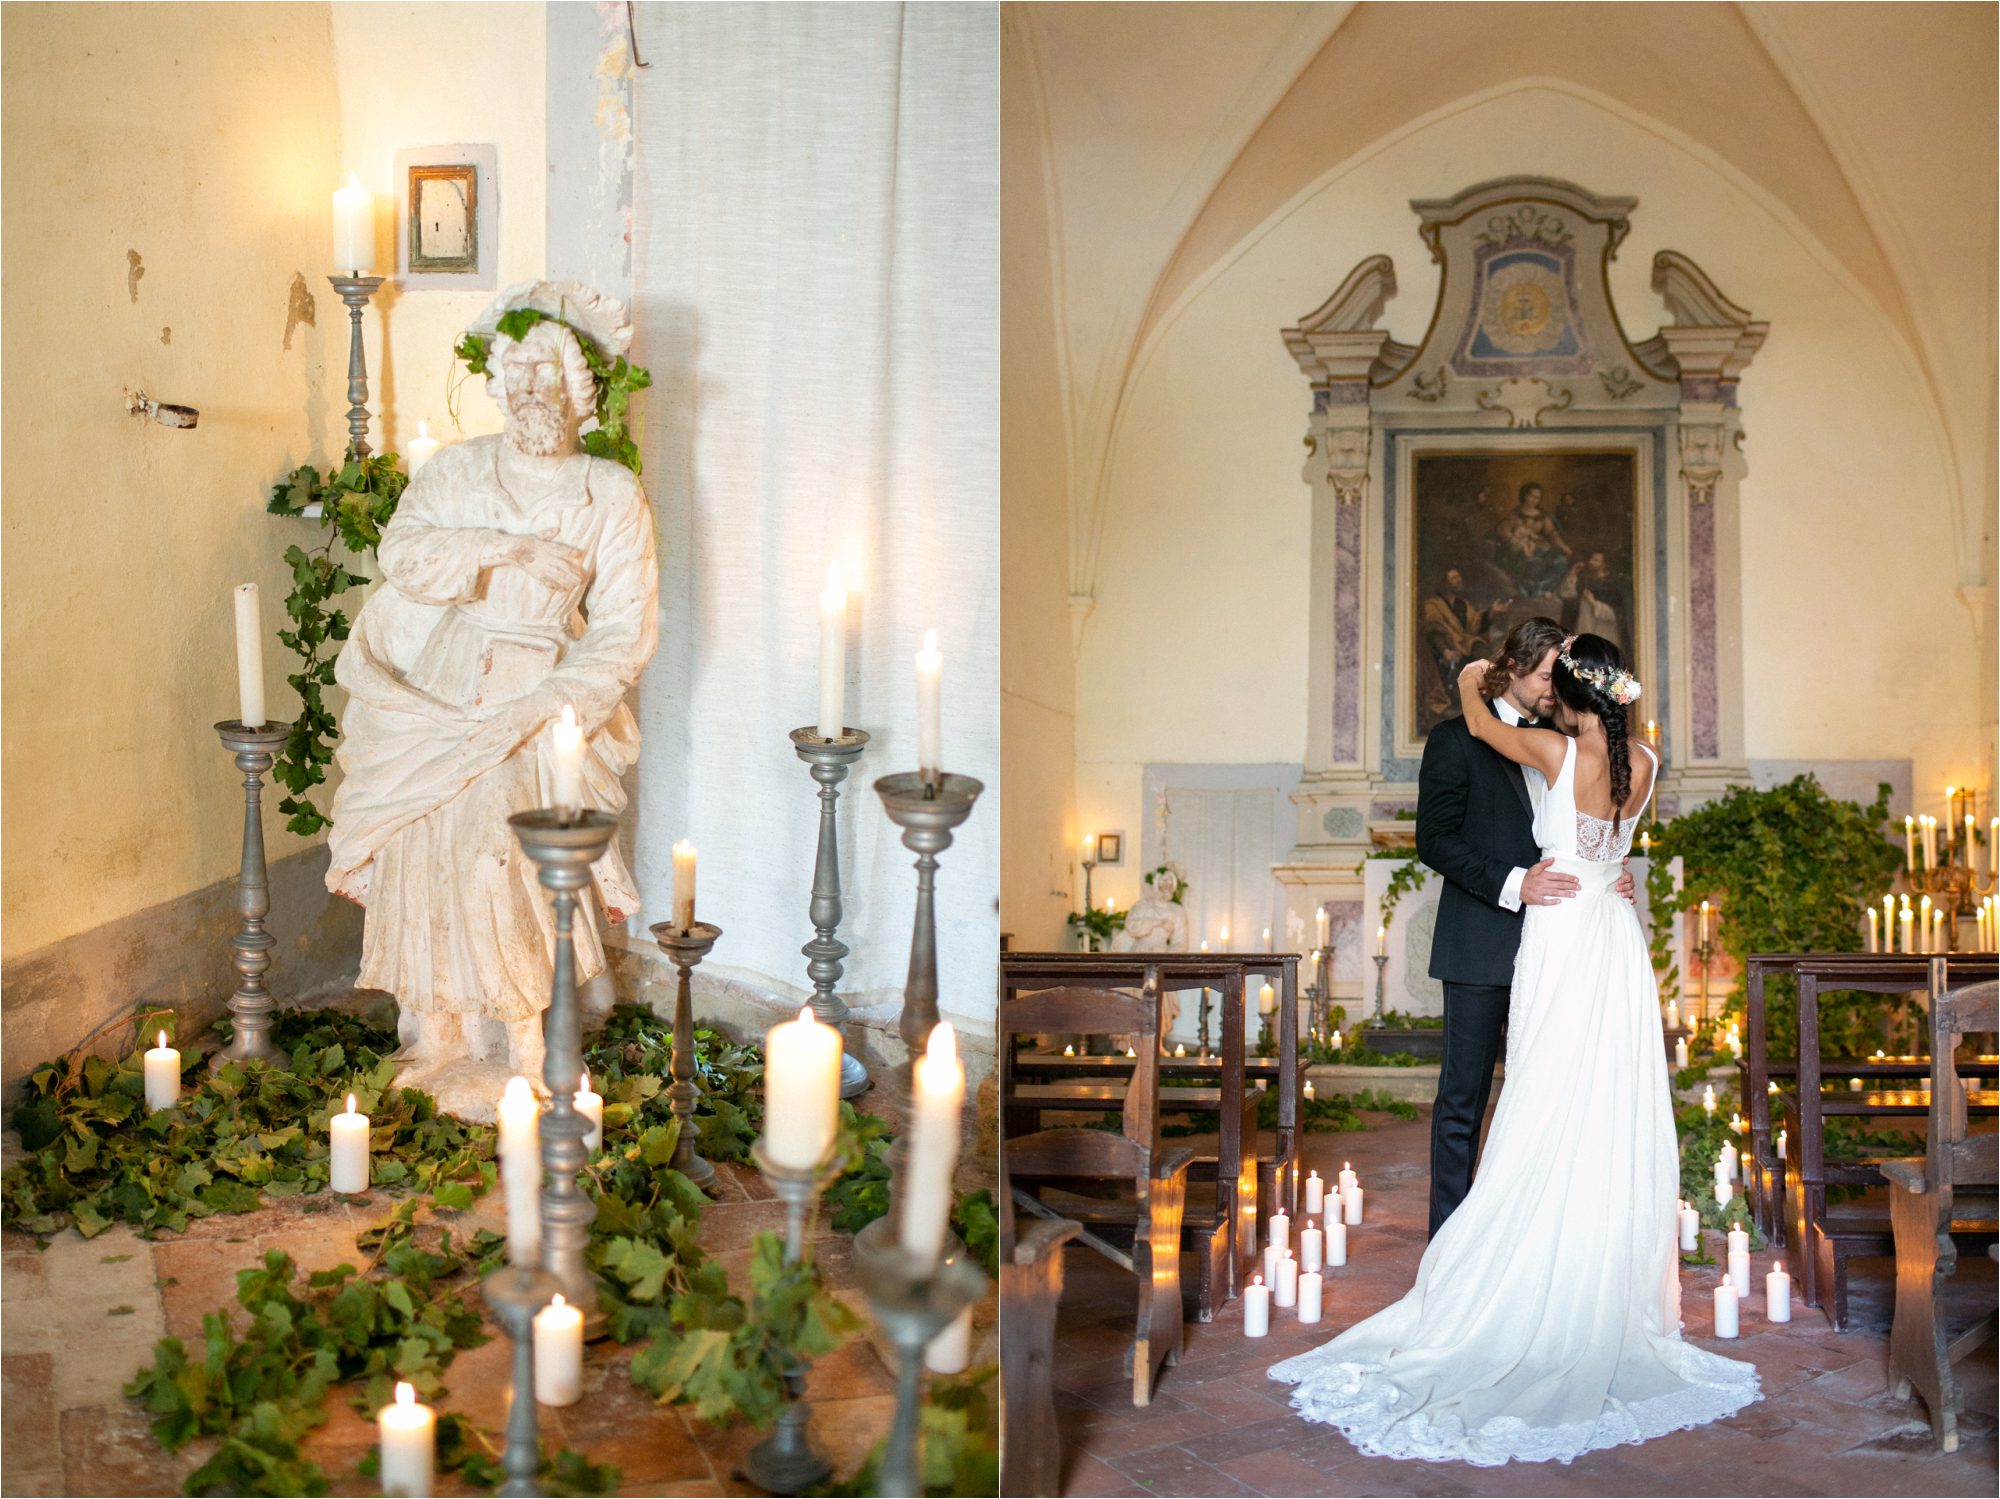 Romantic wedding inspiration in Italy